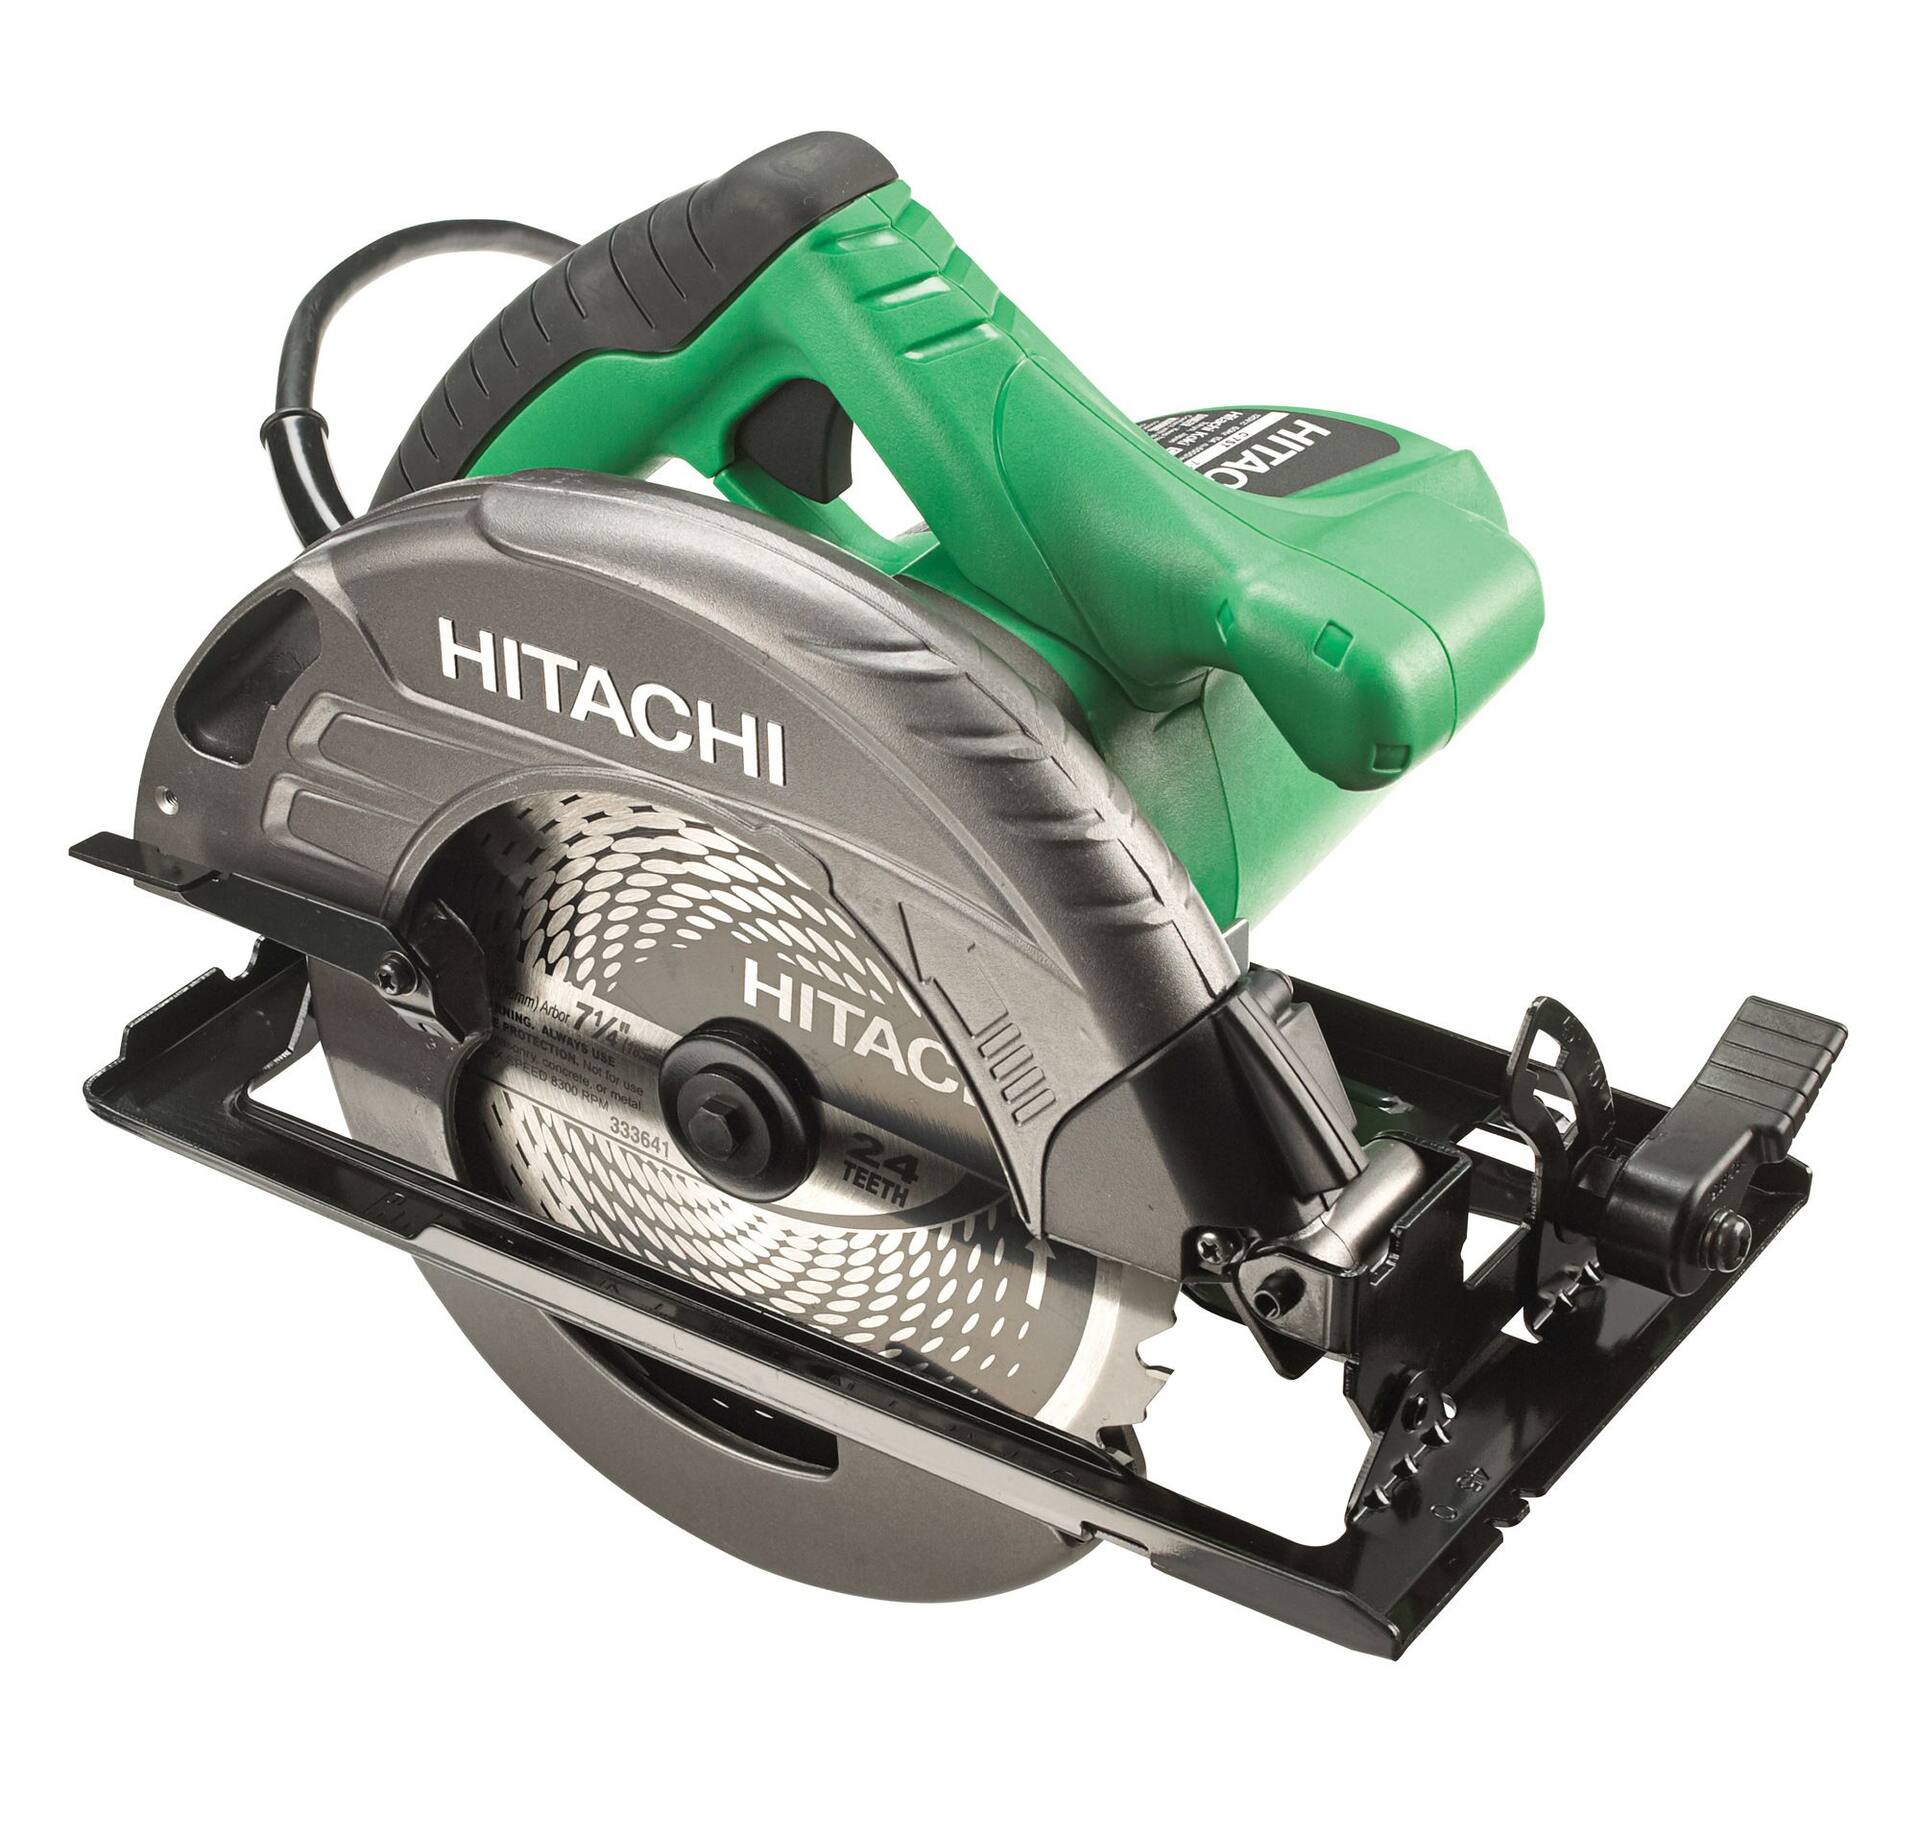 Hitachi 7-14-in Circular Saw with Case